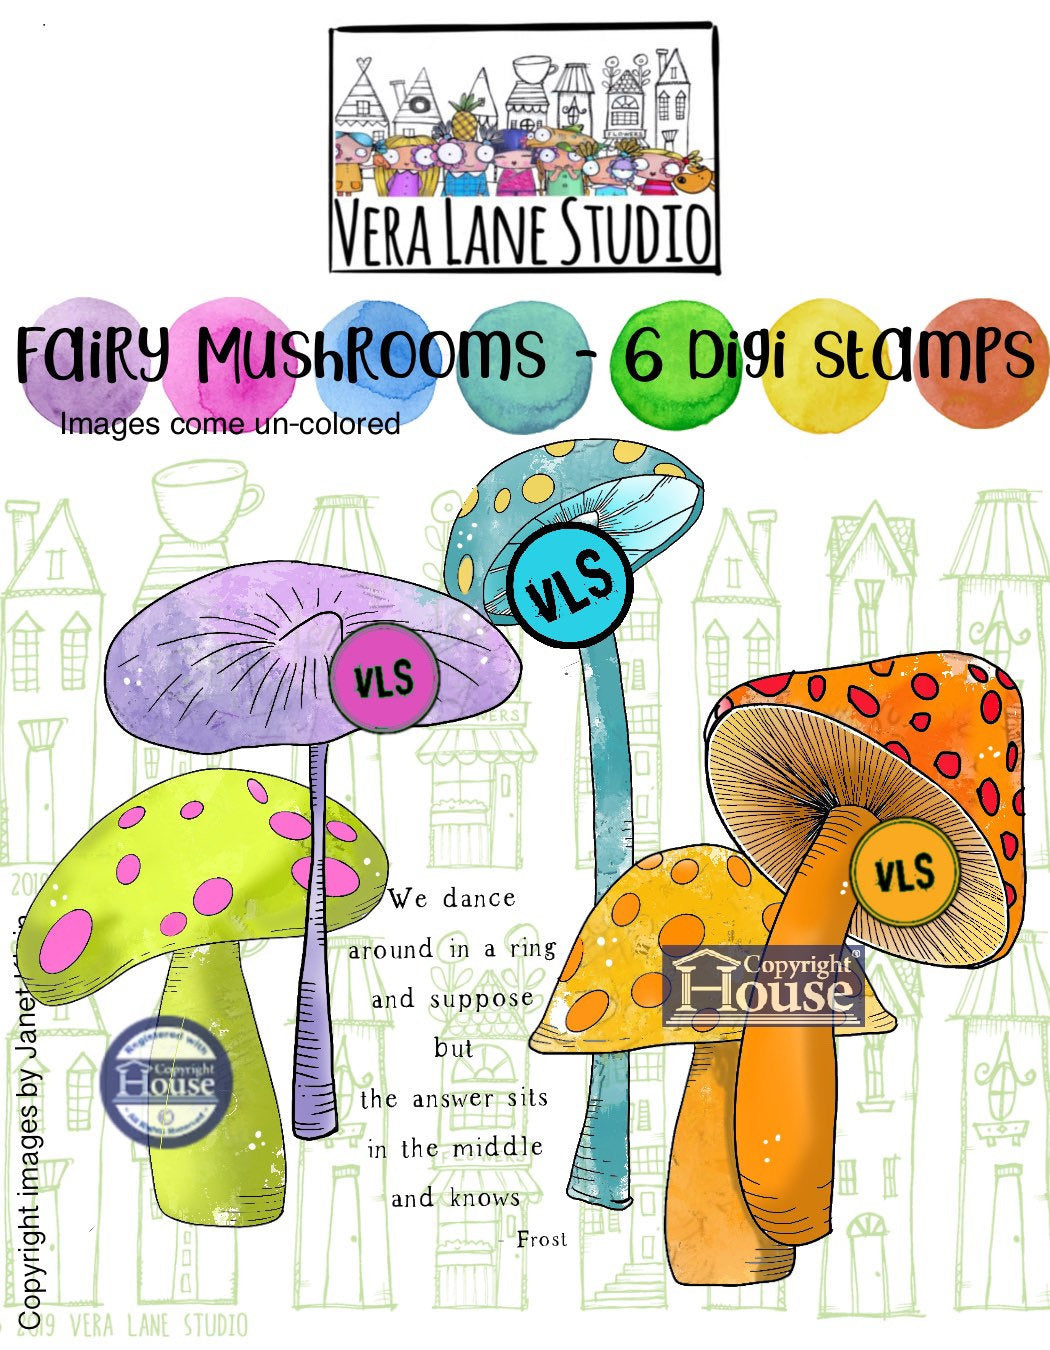 Fairy Mushrooms - 6 digi stamps in PNG and JPG files